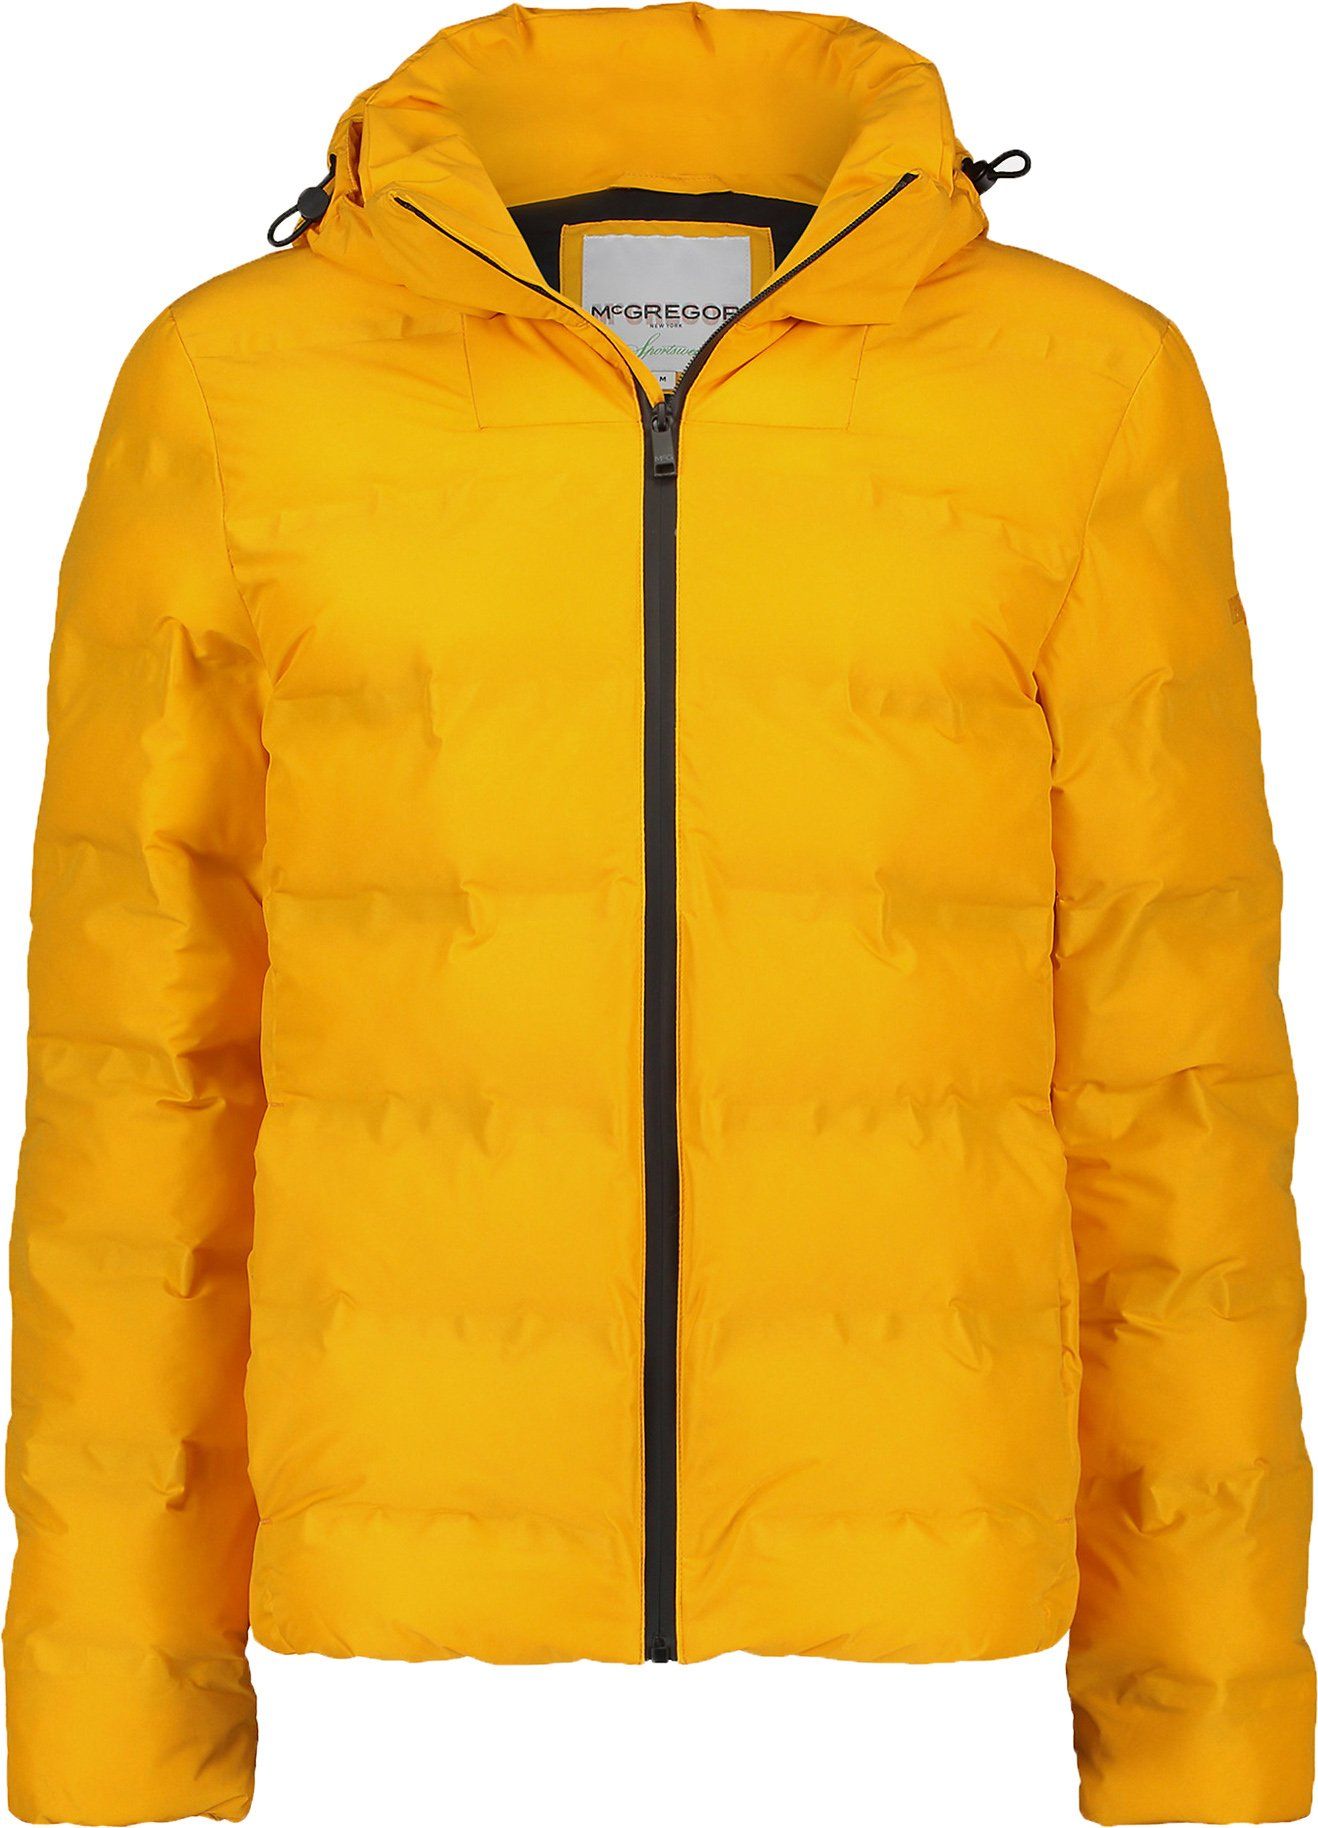 McGregor Puffer Jacket Yellow size M